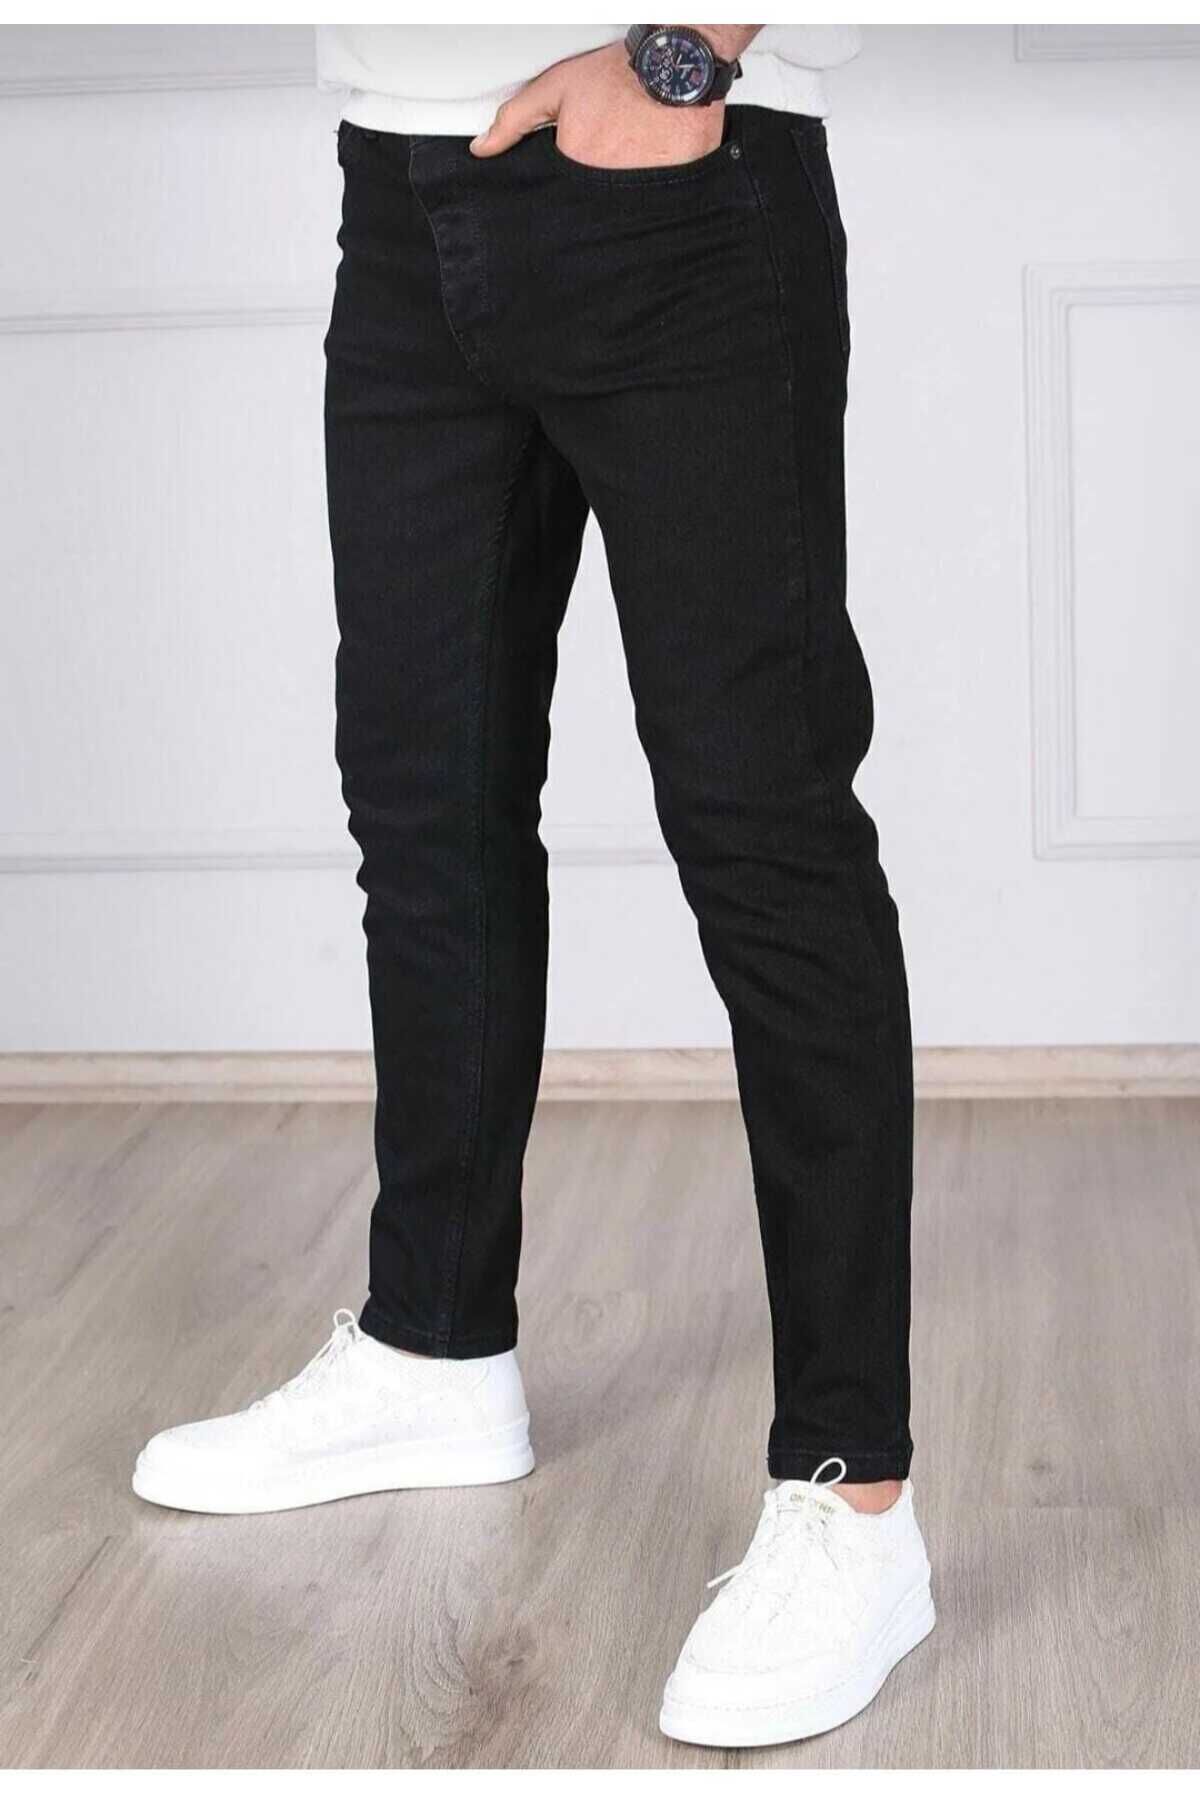 KING SEZAR Erkek Siyah Slim Fit Likralı Esnek Jeans Erkek Kot Pantolon